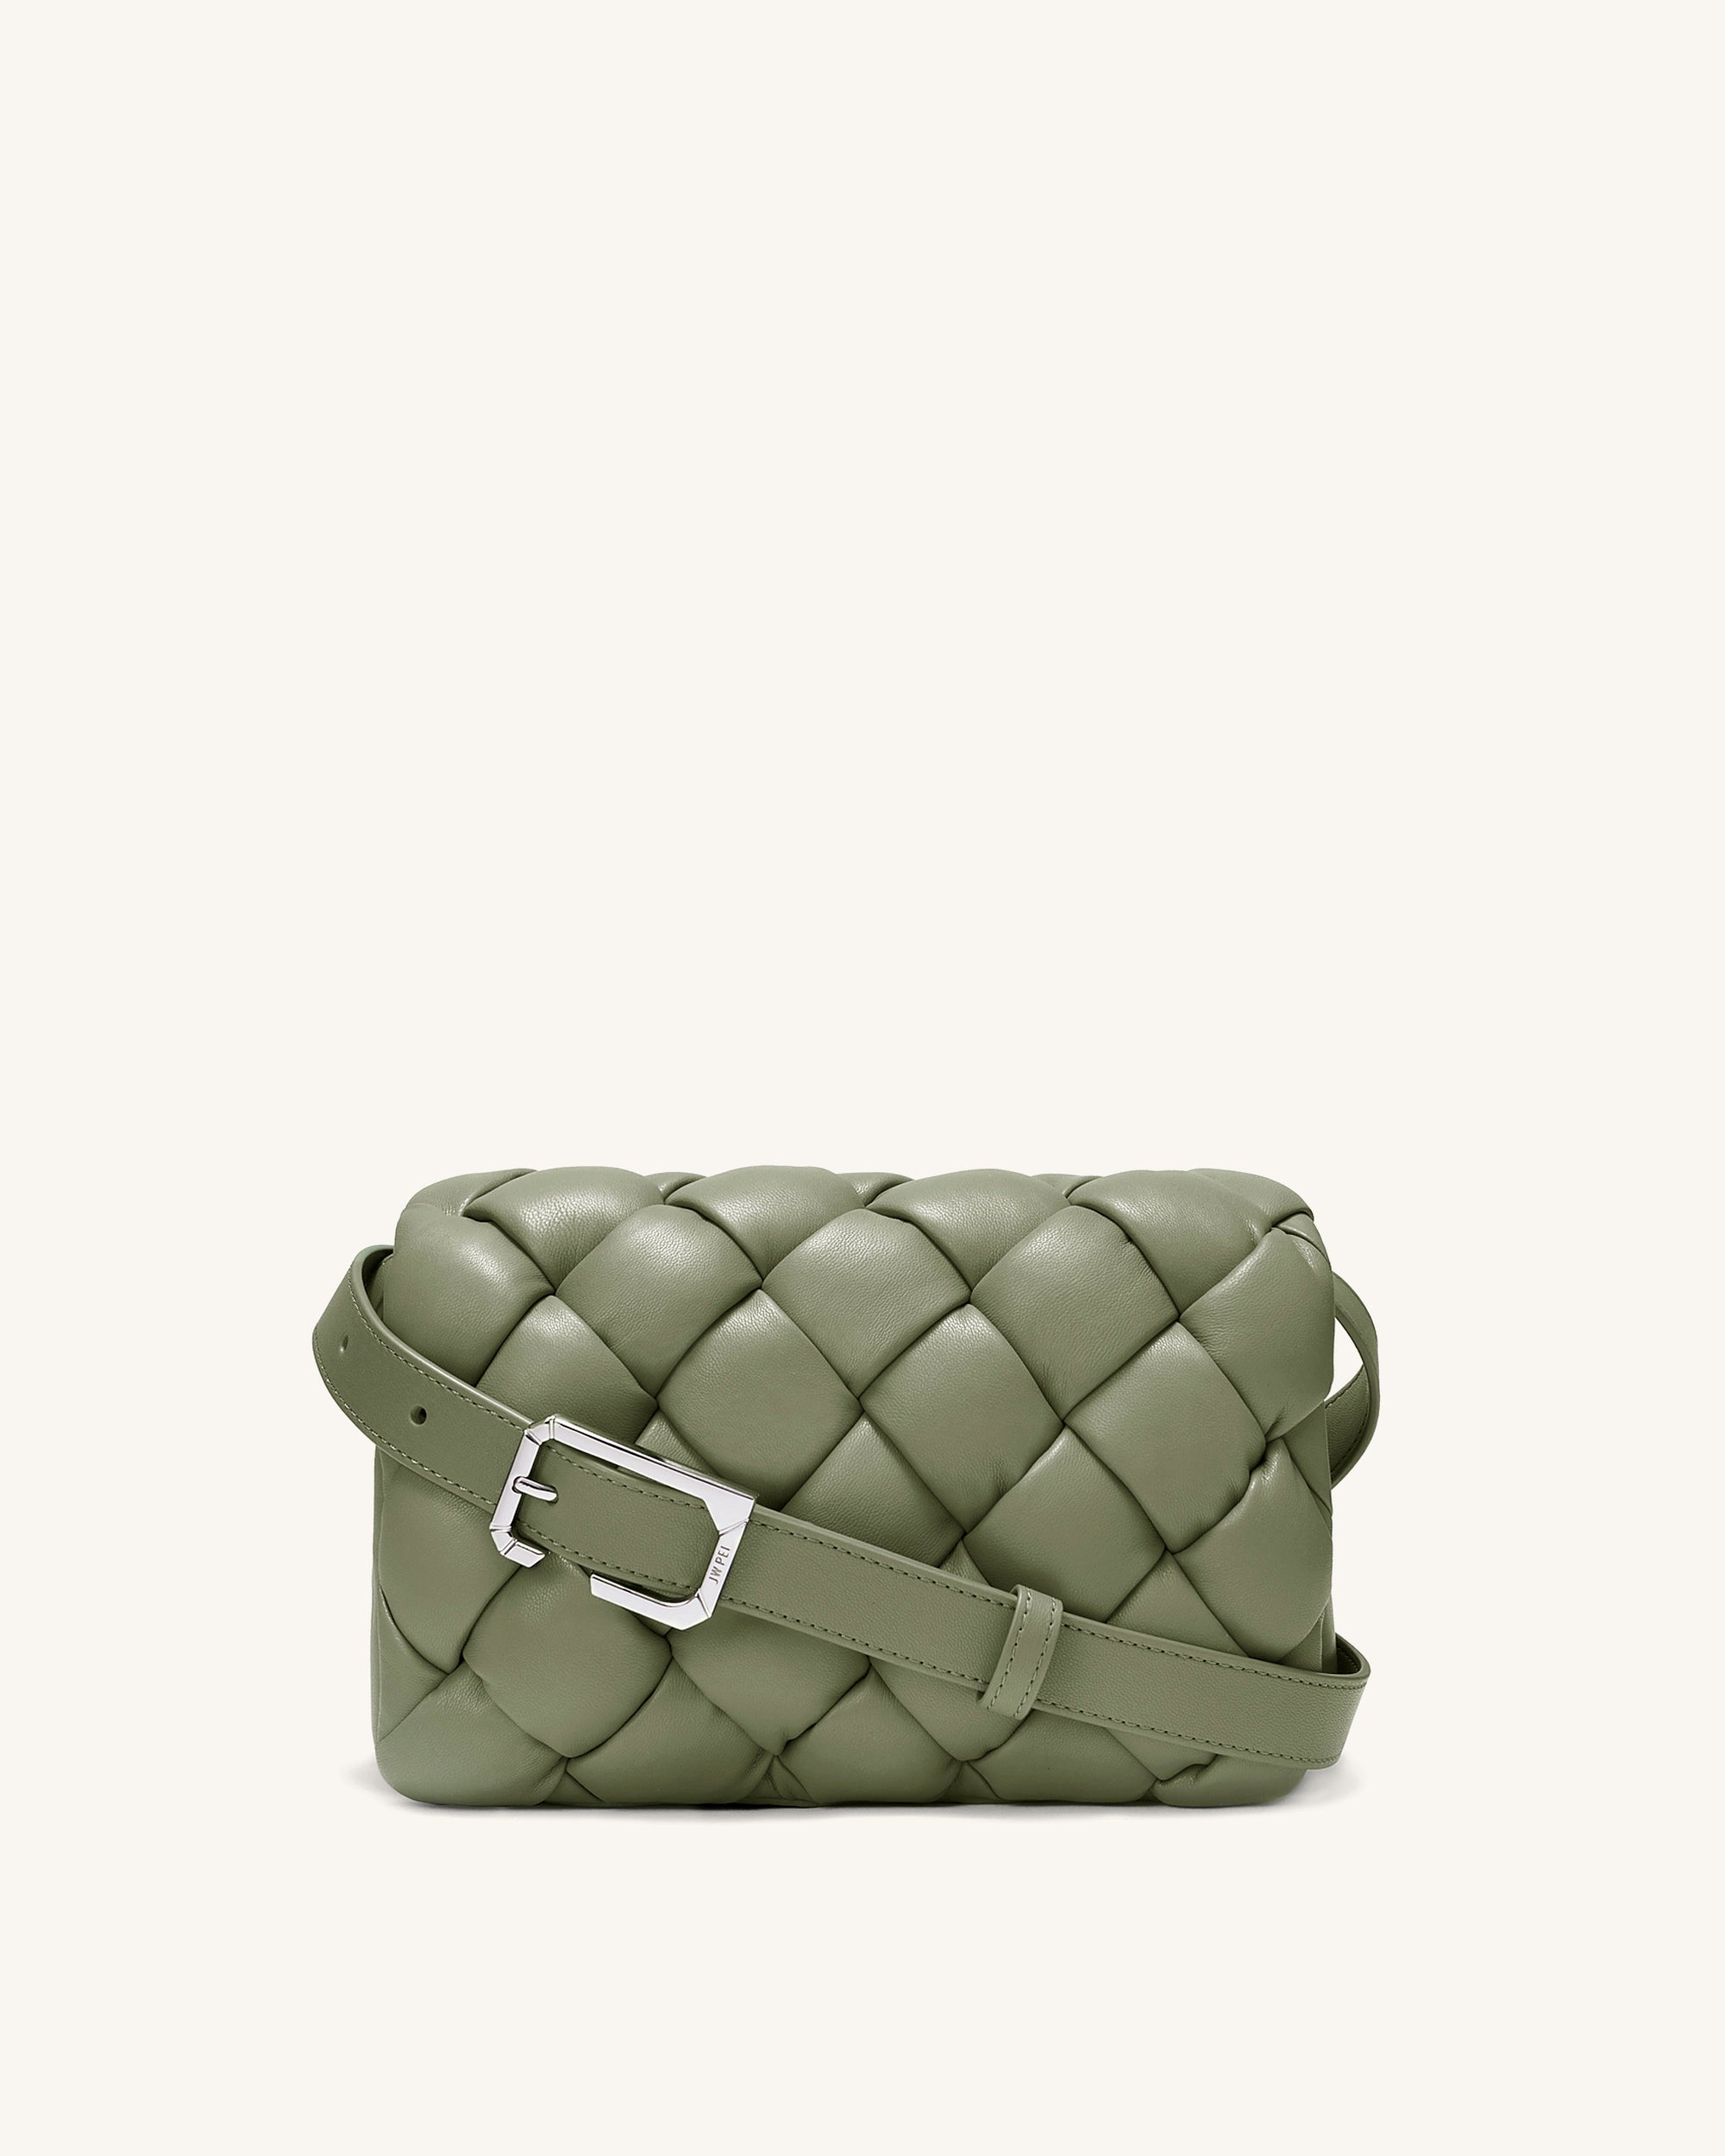 Maze Bag - Sage Green - Fashion Bag Online Shopping - JW Pei